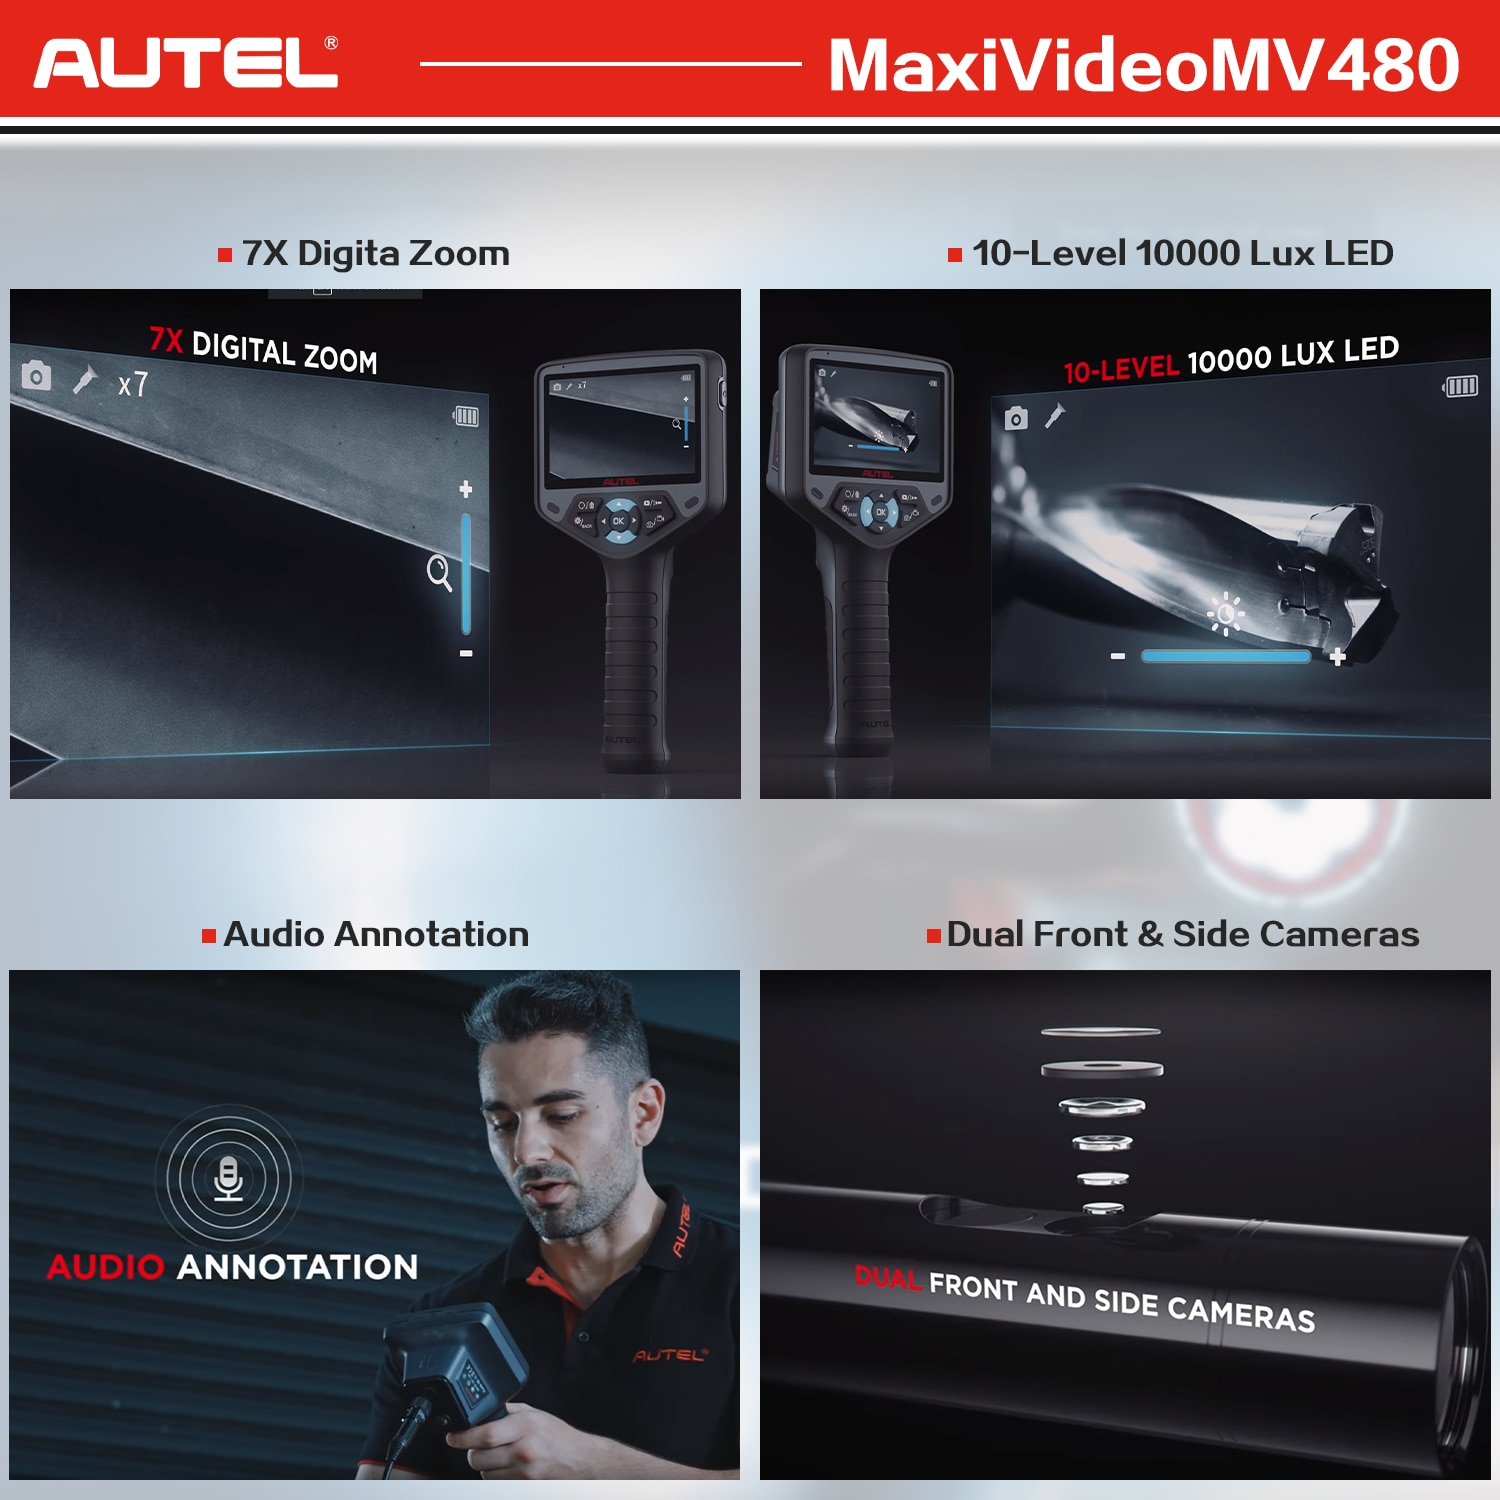 Autel MV480 Industrial Endoscope